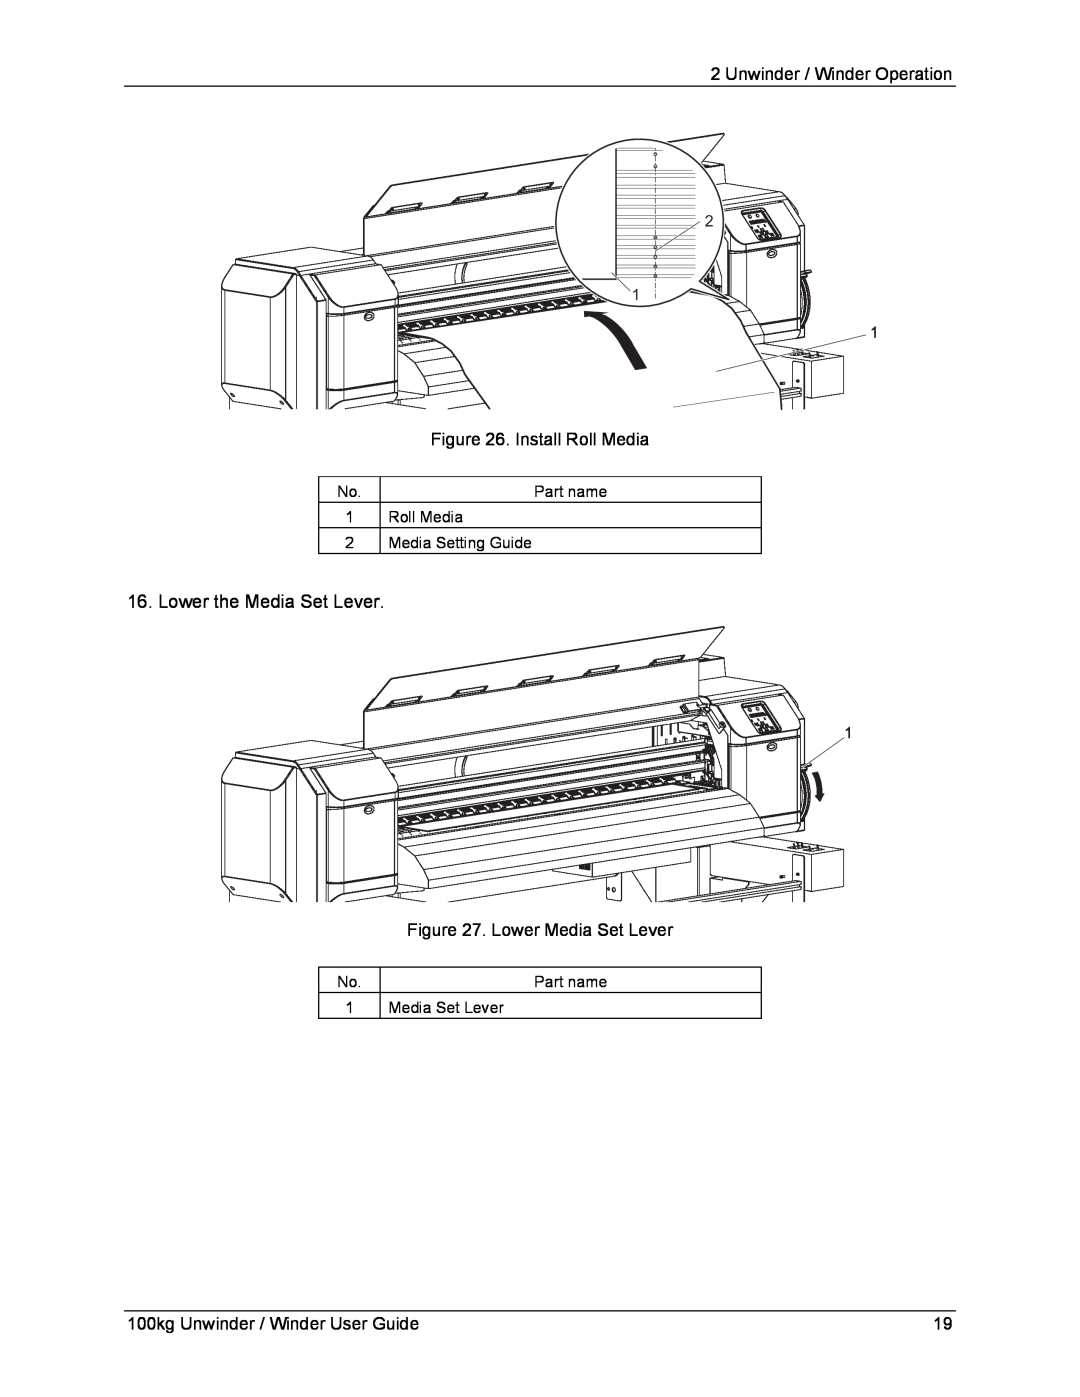 Xerox 8254E Unwinder / Winder Operation, Install Roll Media, Lower Media Set Lever, 100kg Unwinder / Winder User Guide 